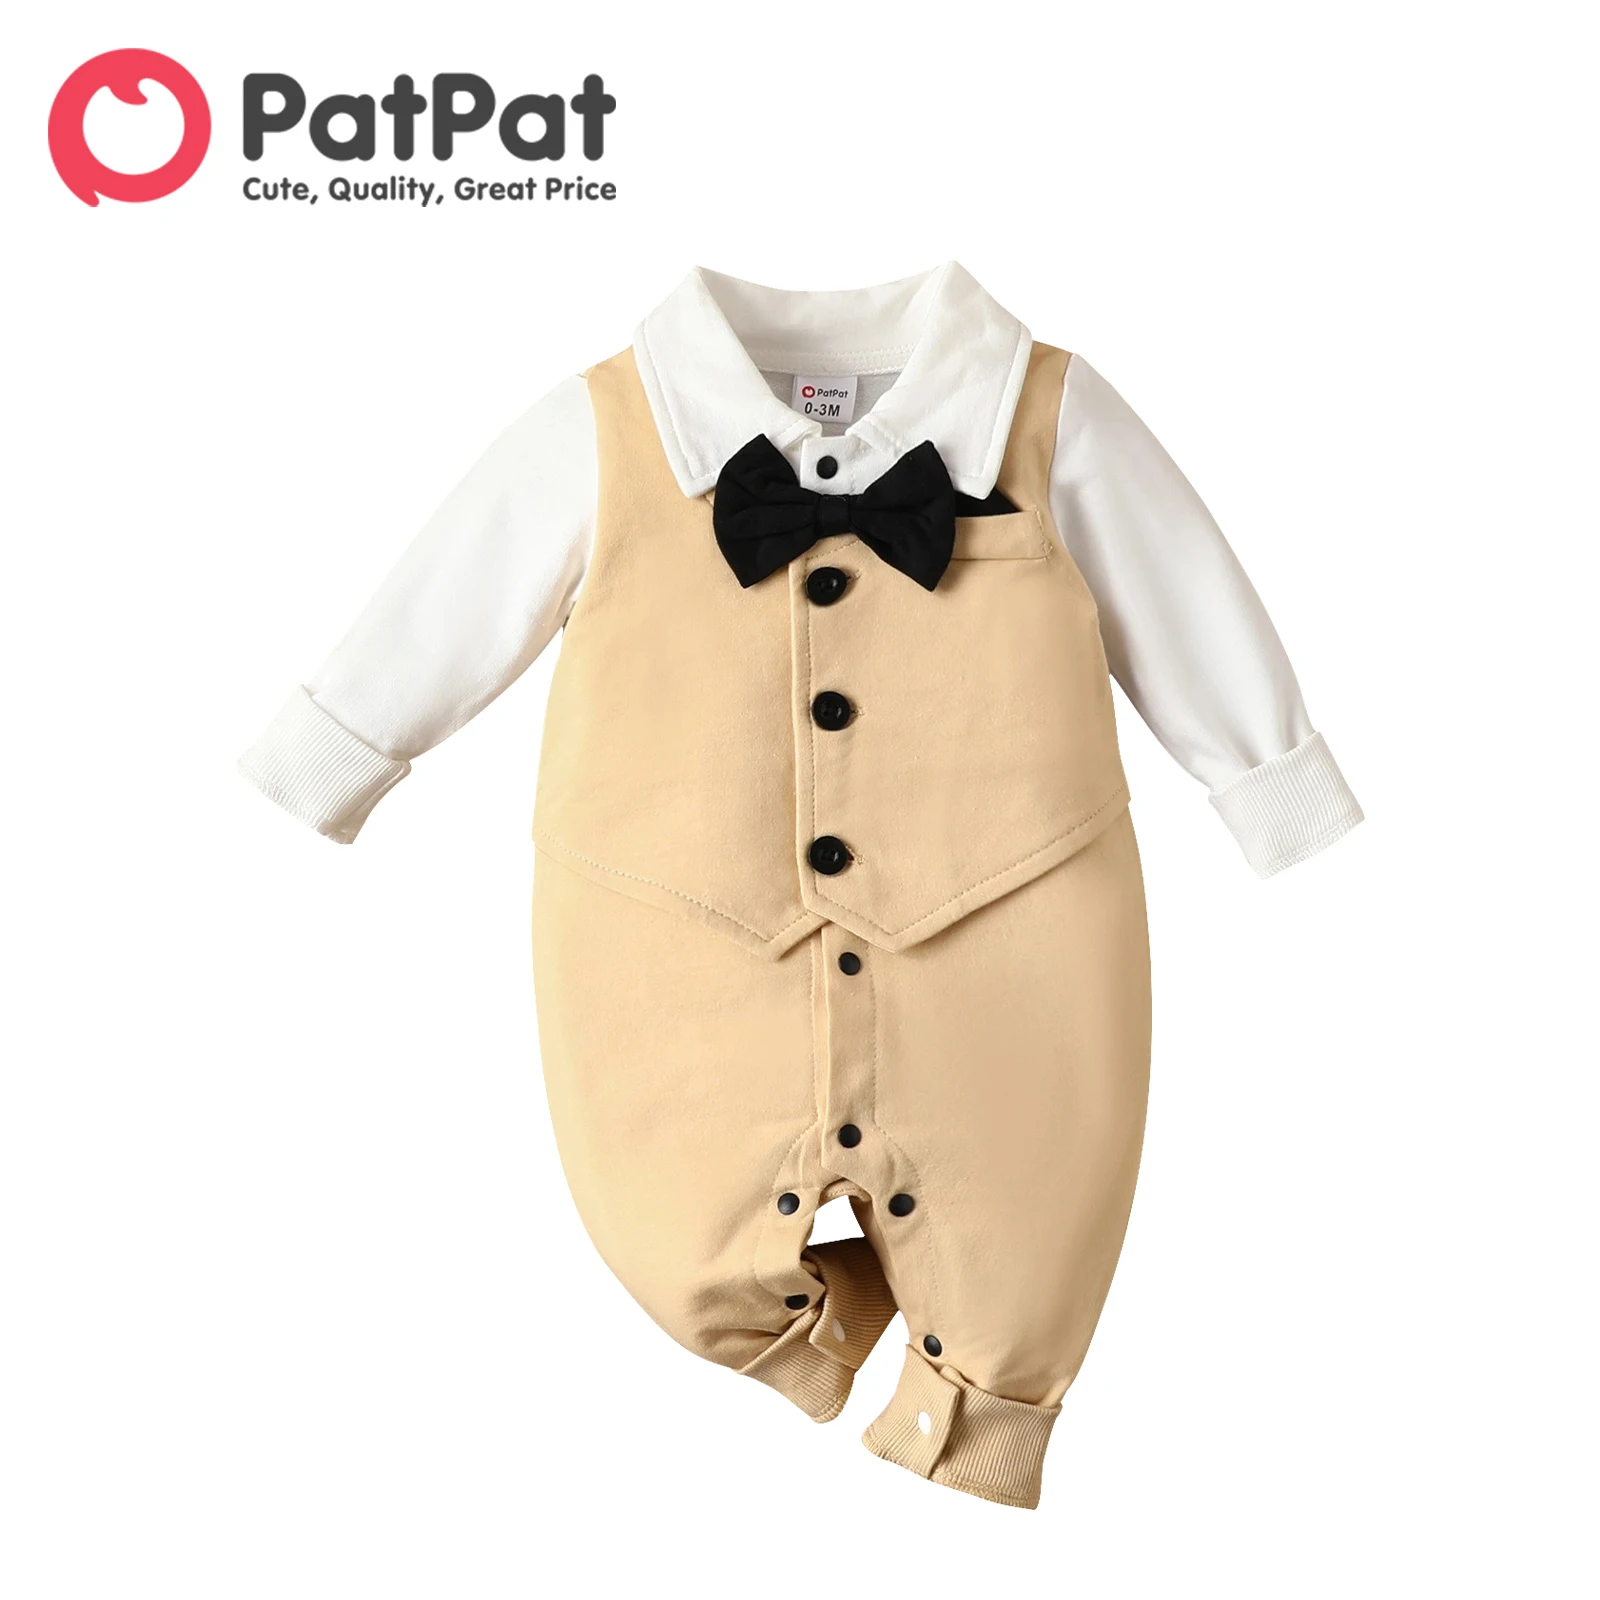 PatPat 100% Cotton Baby Boy Gentleman Party Outfit Bow Tie Decor Button Front Long-sleeve Jumpsuit